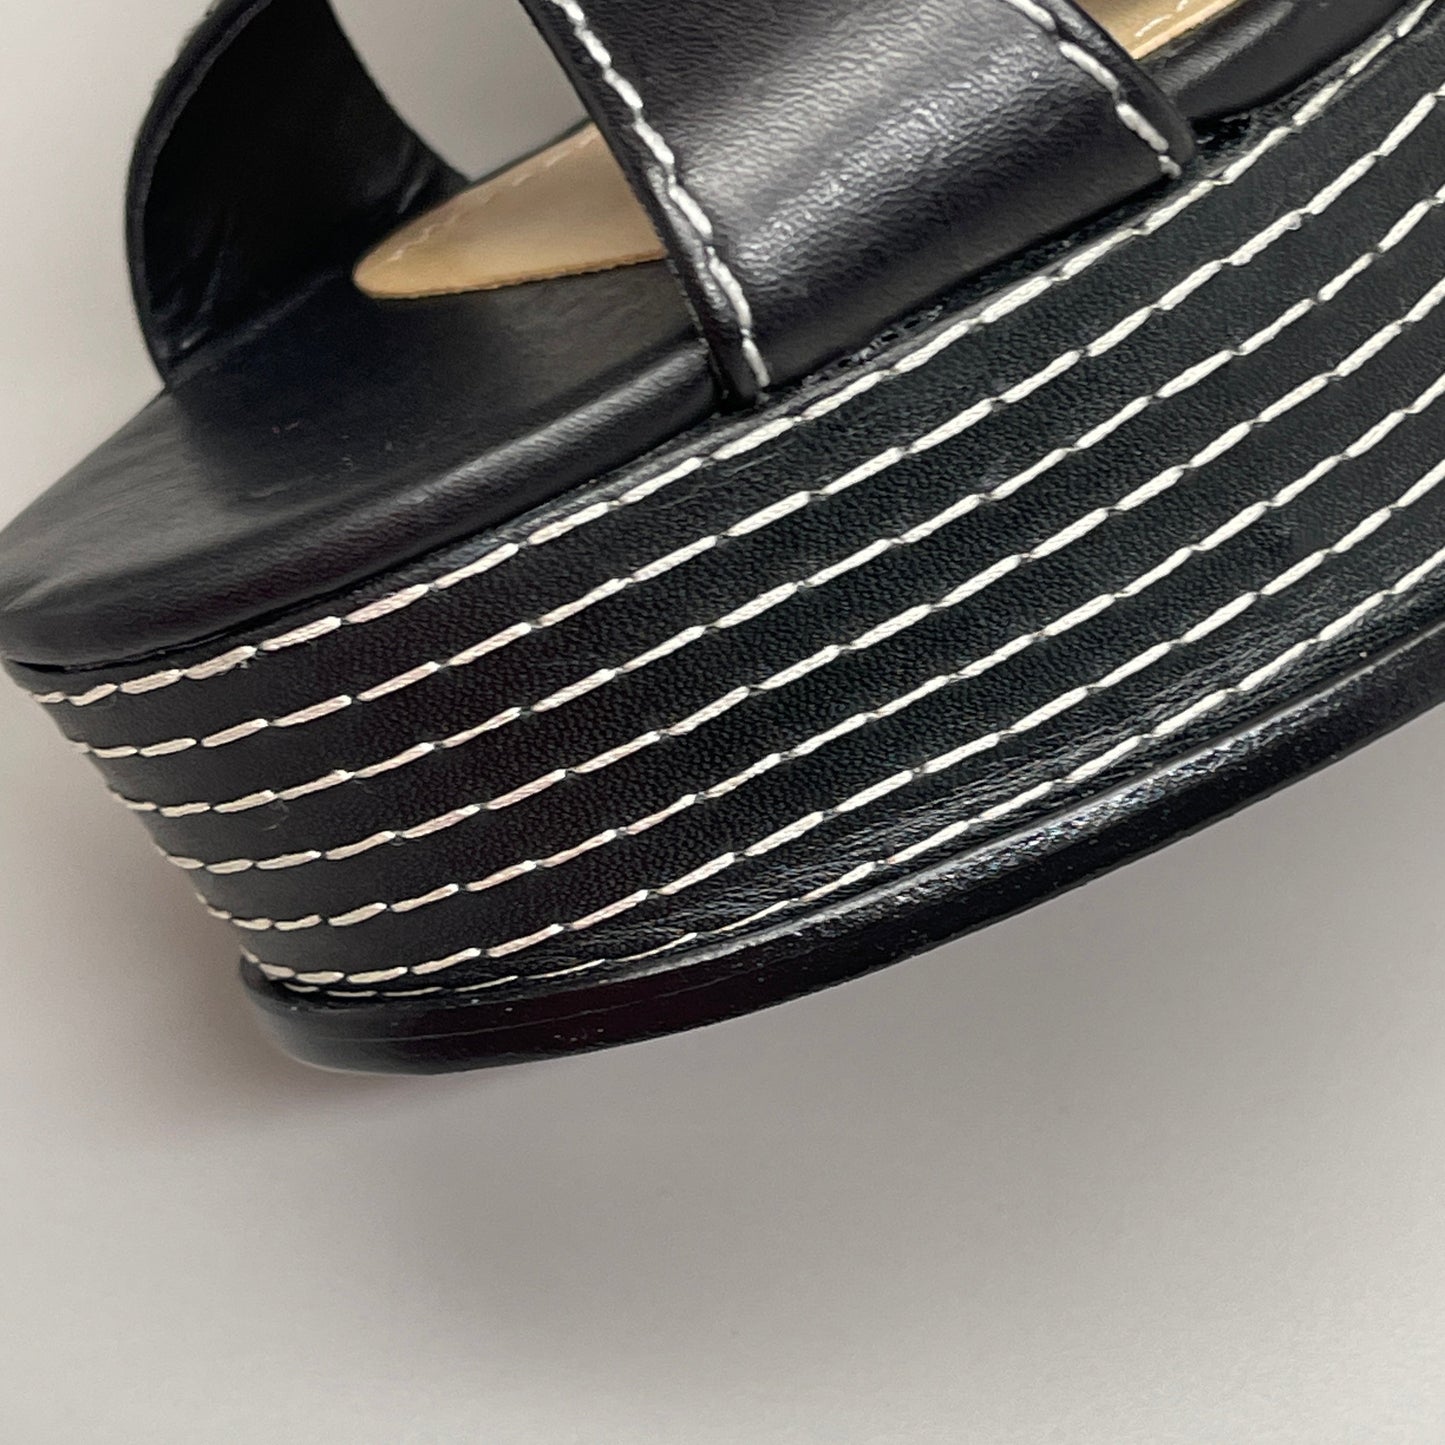 SCHUTZ Keefa Casual Women's Leather Sandal Black Platform 4" Heel Shoes Sz 8B (New)